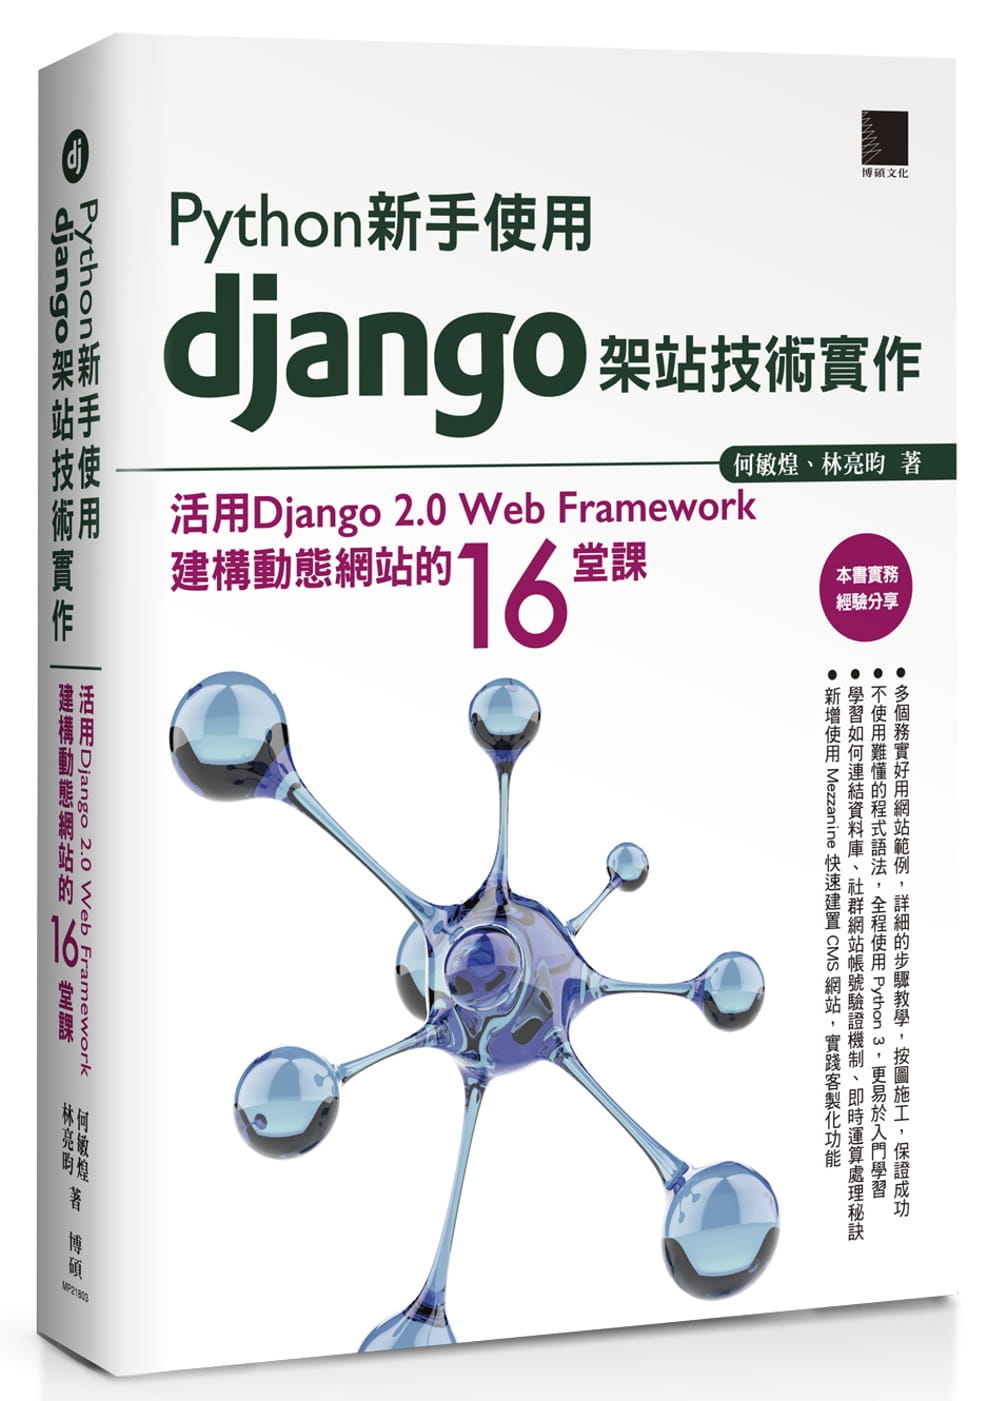 Python 網頁開發 django 入門書